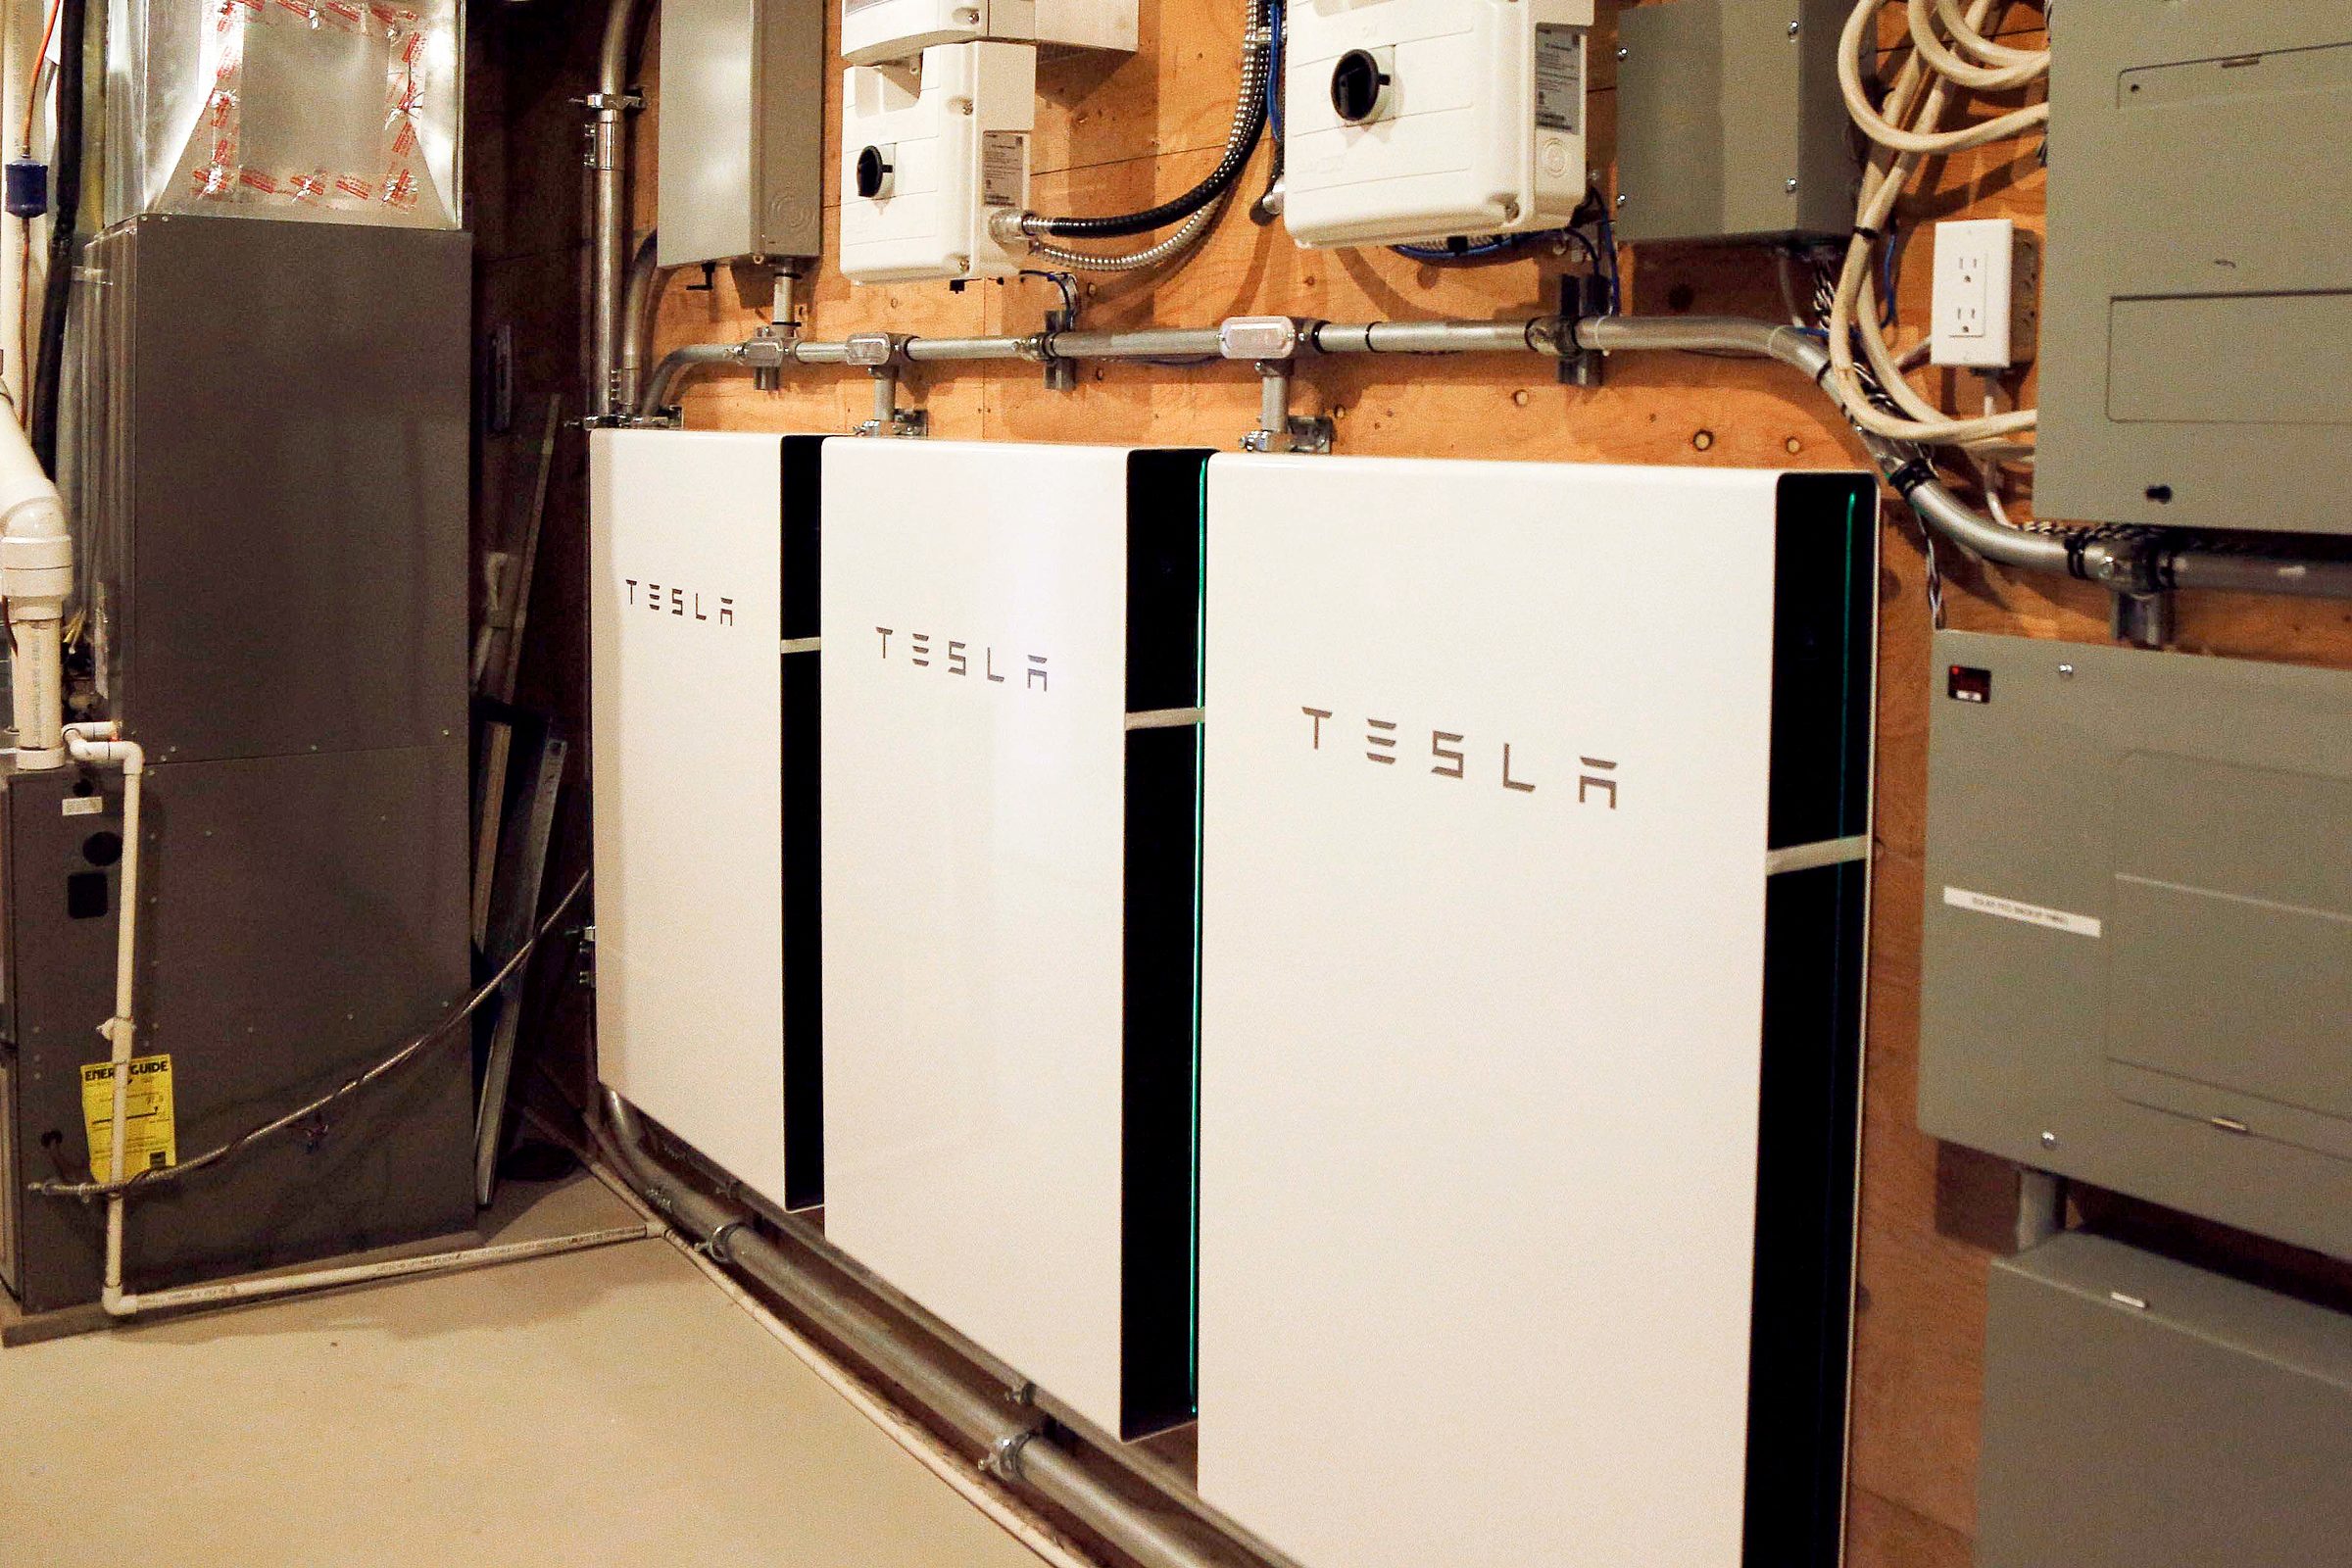 Tesla Home Solar Battery bank in a basement